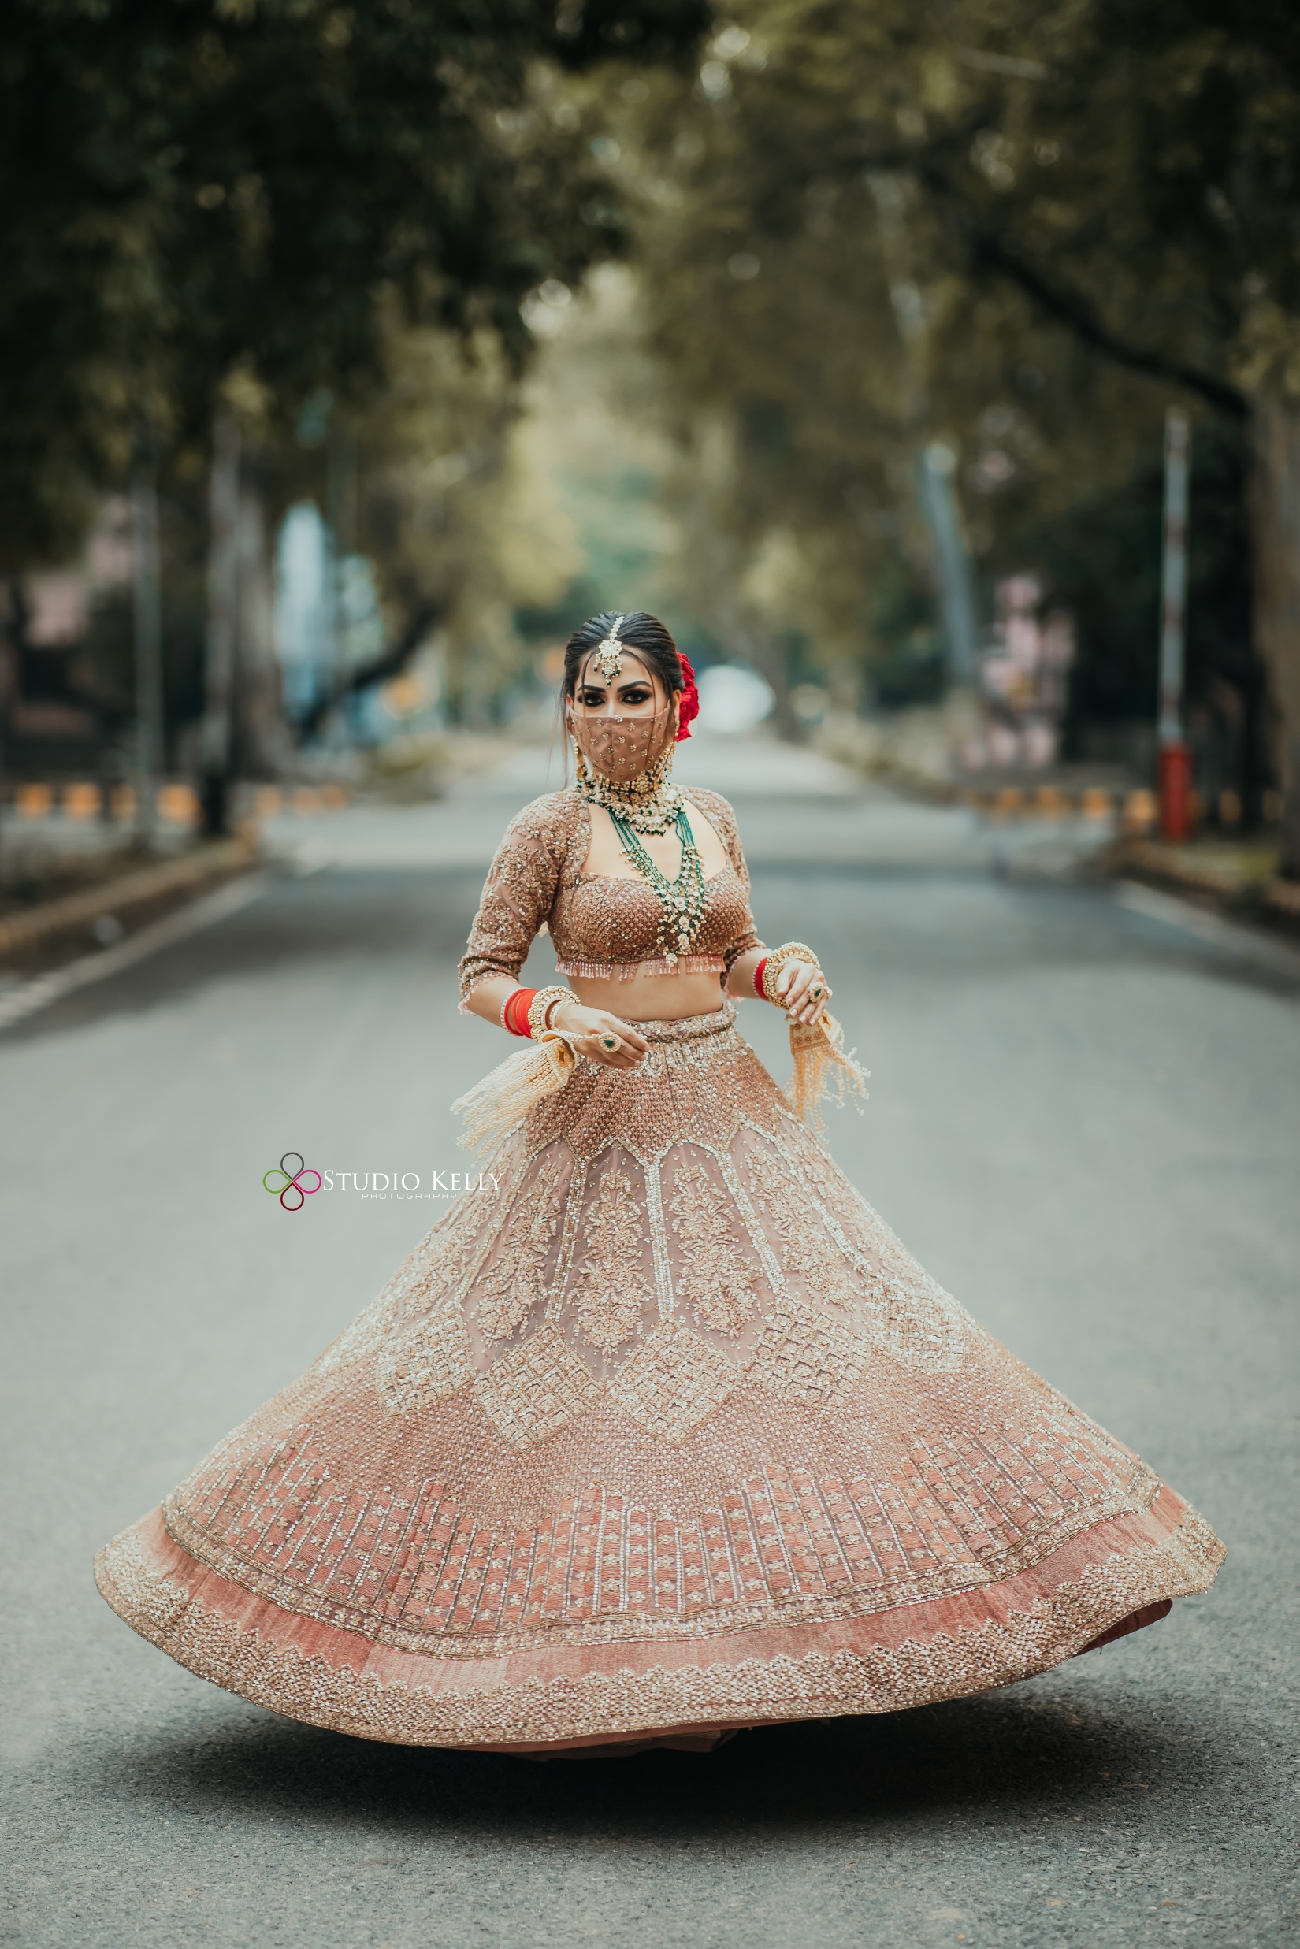 Candid wedding photographers in delhi, india - Studio Kelly